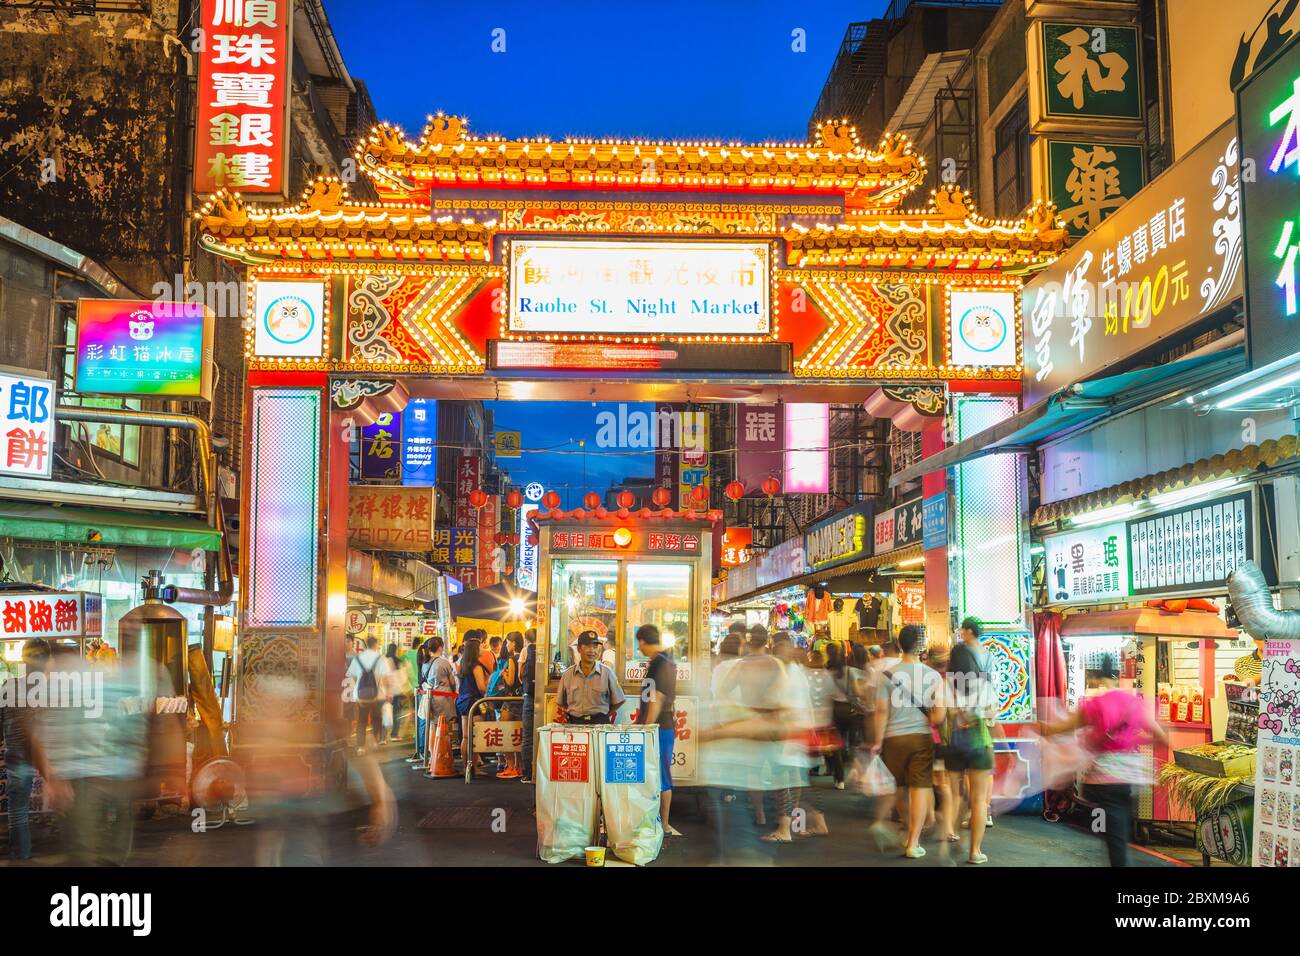 Taipei, Taiwan - September 8, 2015: night view of the entrance of Raohe Street Night Market, one of the most popular night market in taipei Stock Photo